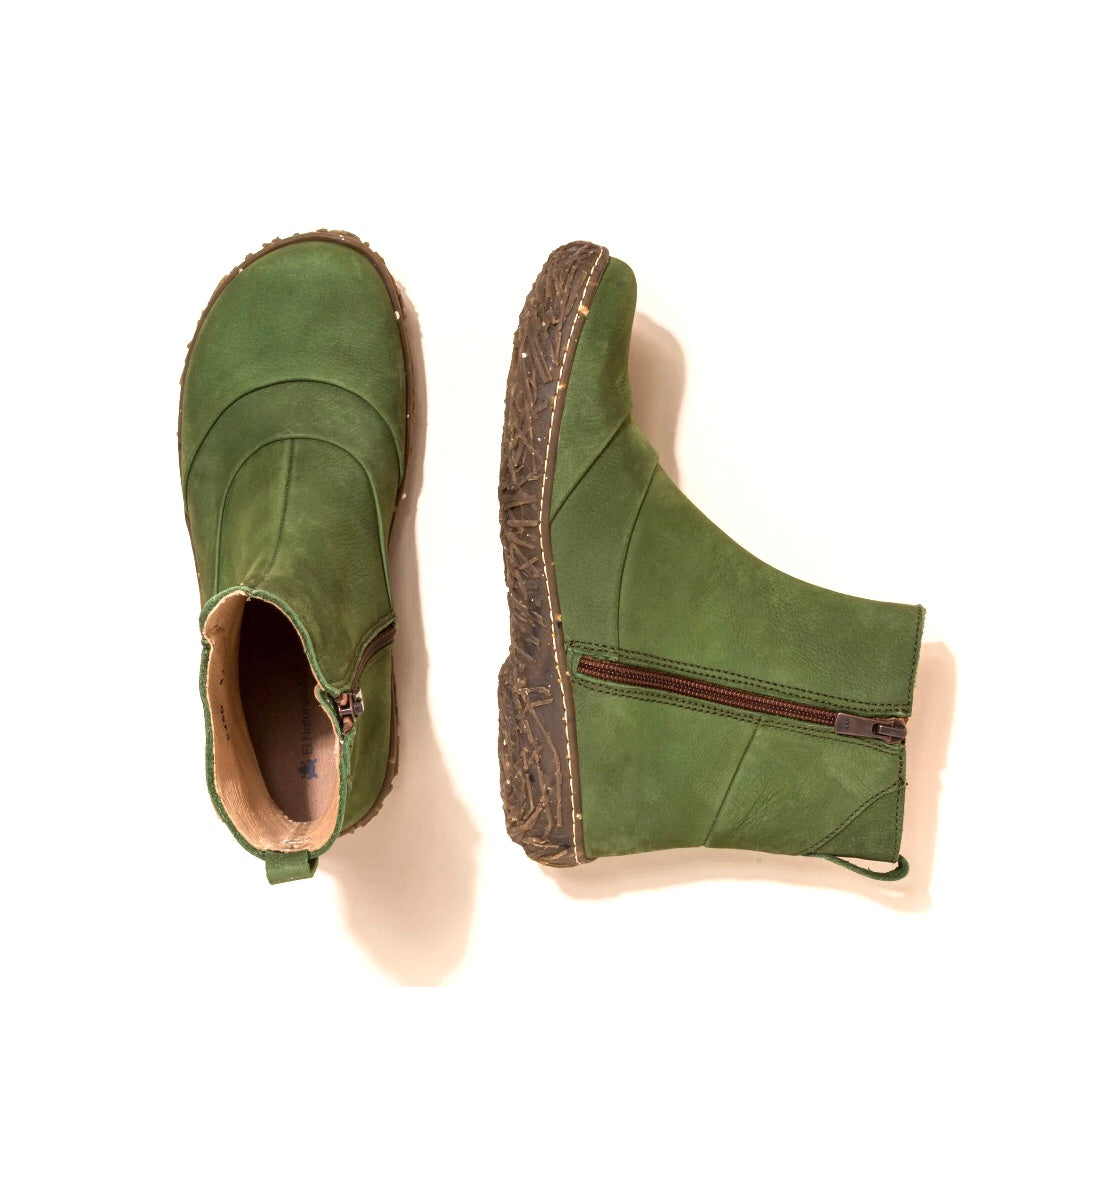 El Naturalista 5450 Selva Green Nido Zip Ankle Boot Made in Spain